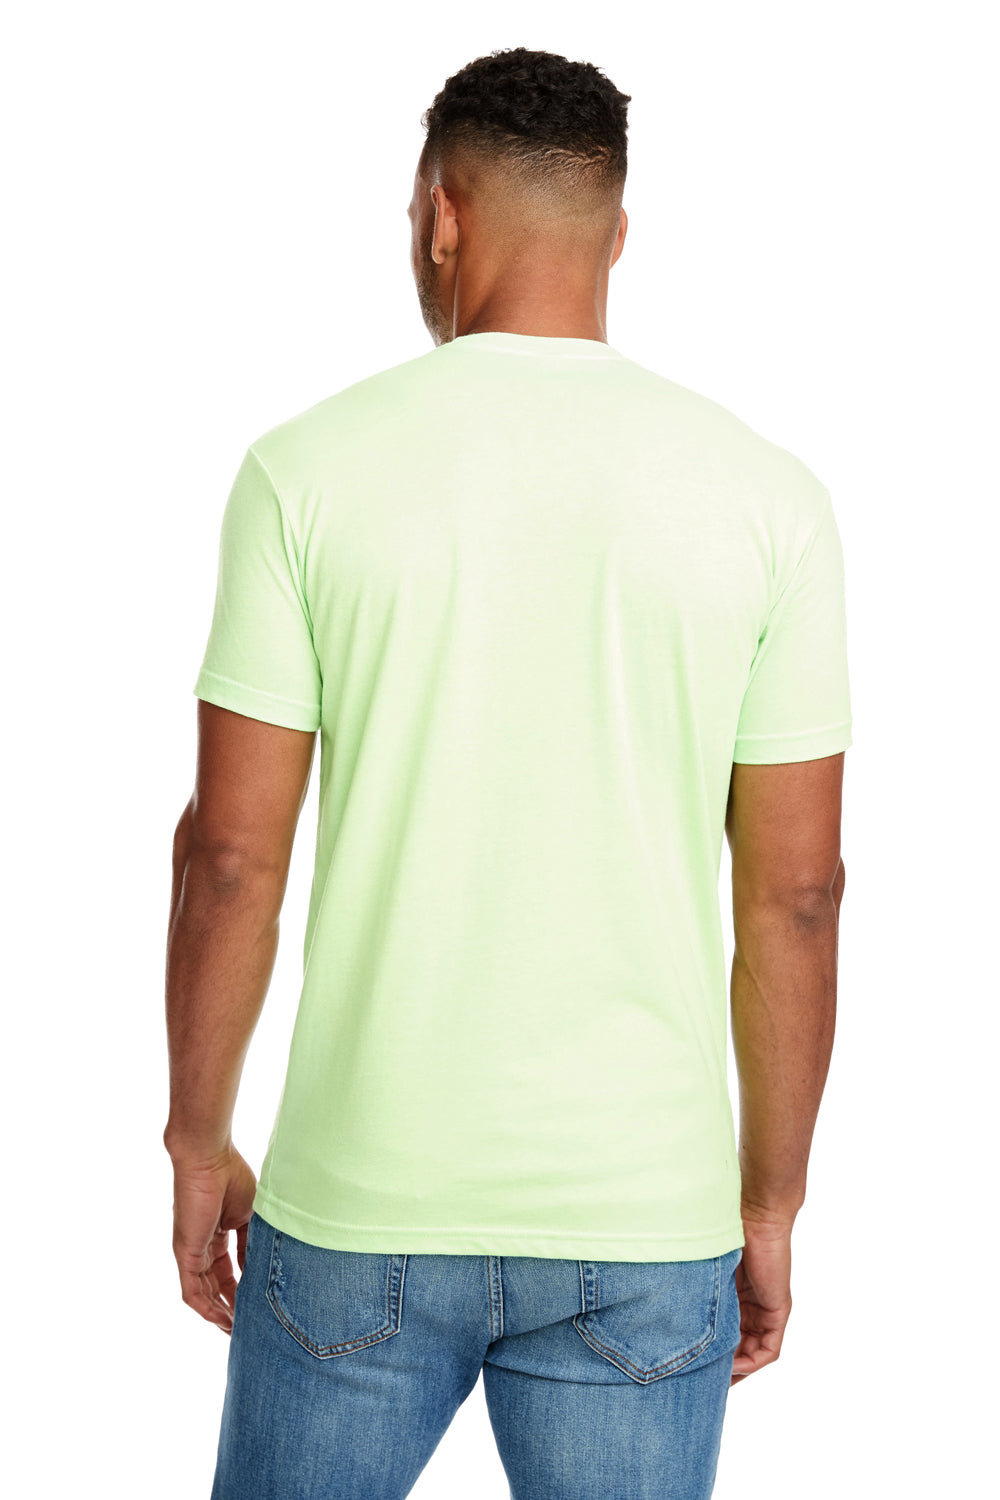 Next Level N6210 Mens CVC Jersey Short Sleeve Crewneck T-Shirt Apple Green Back